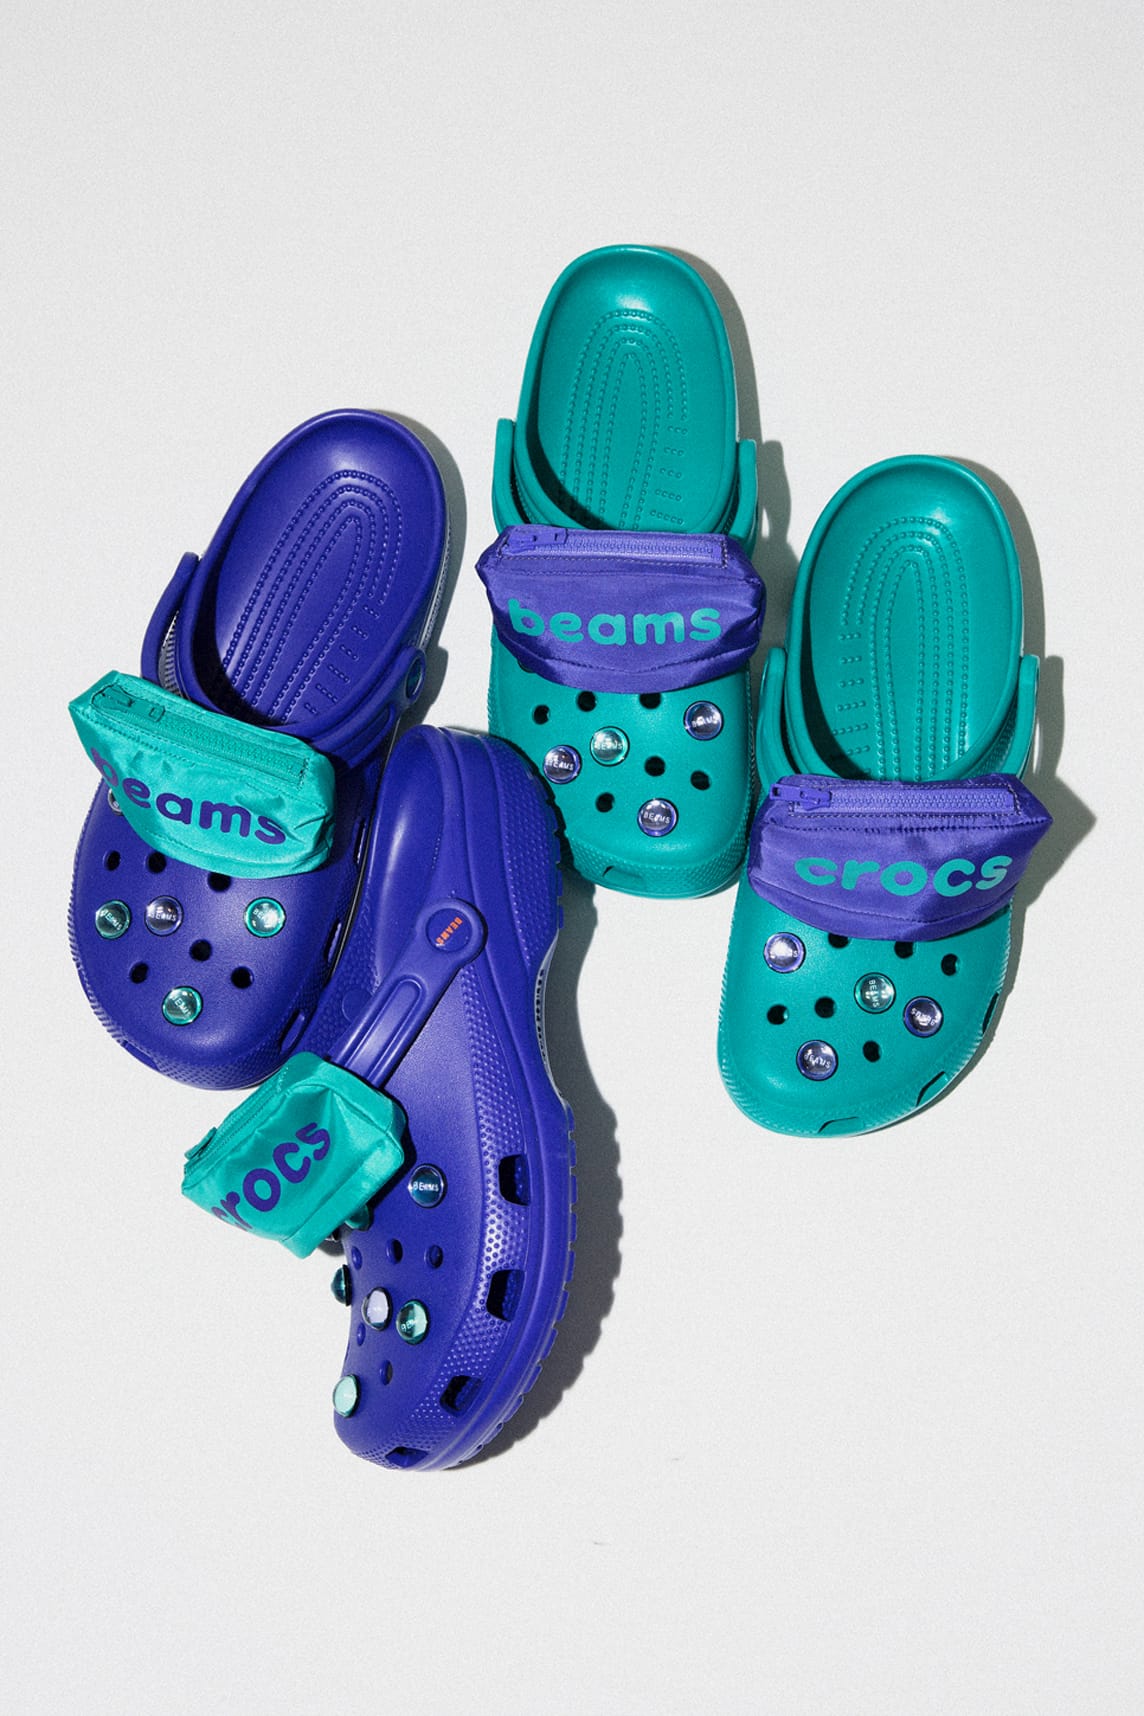 crocs shoes 2019